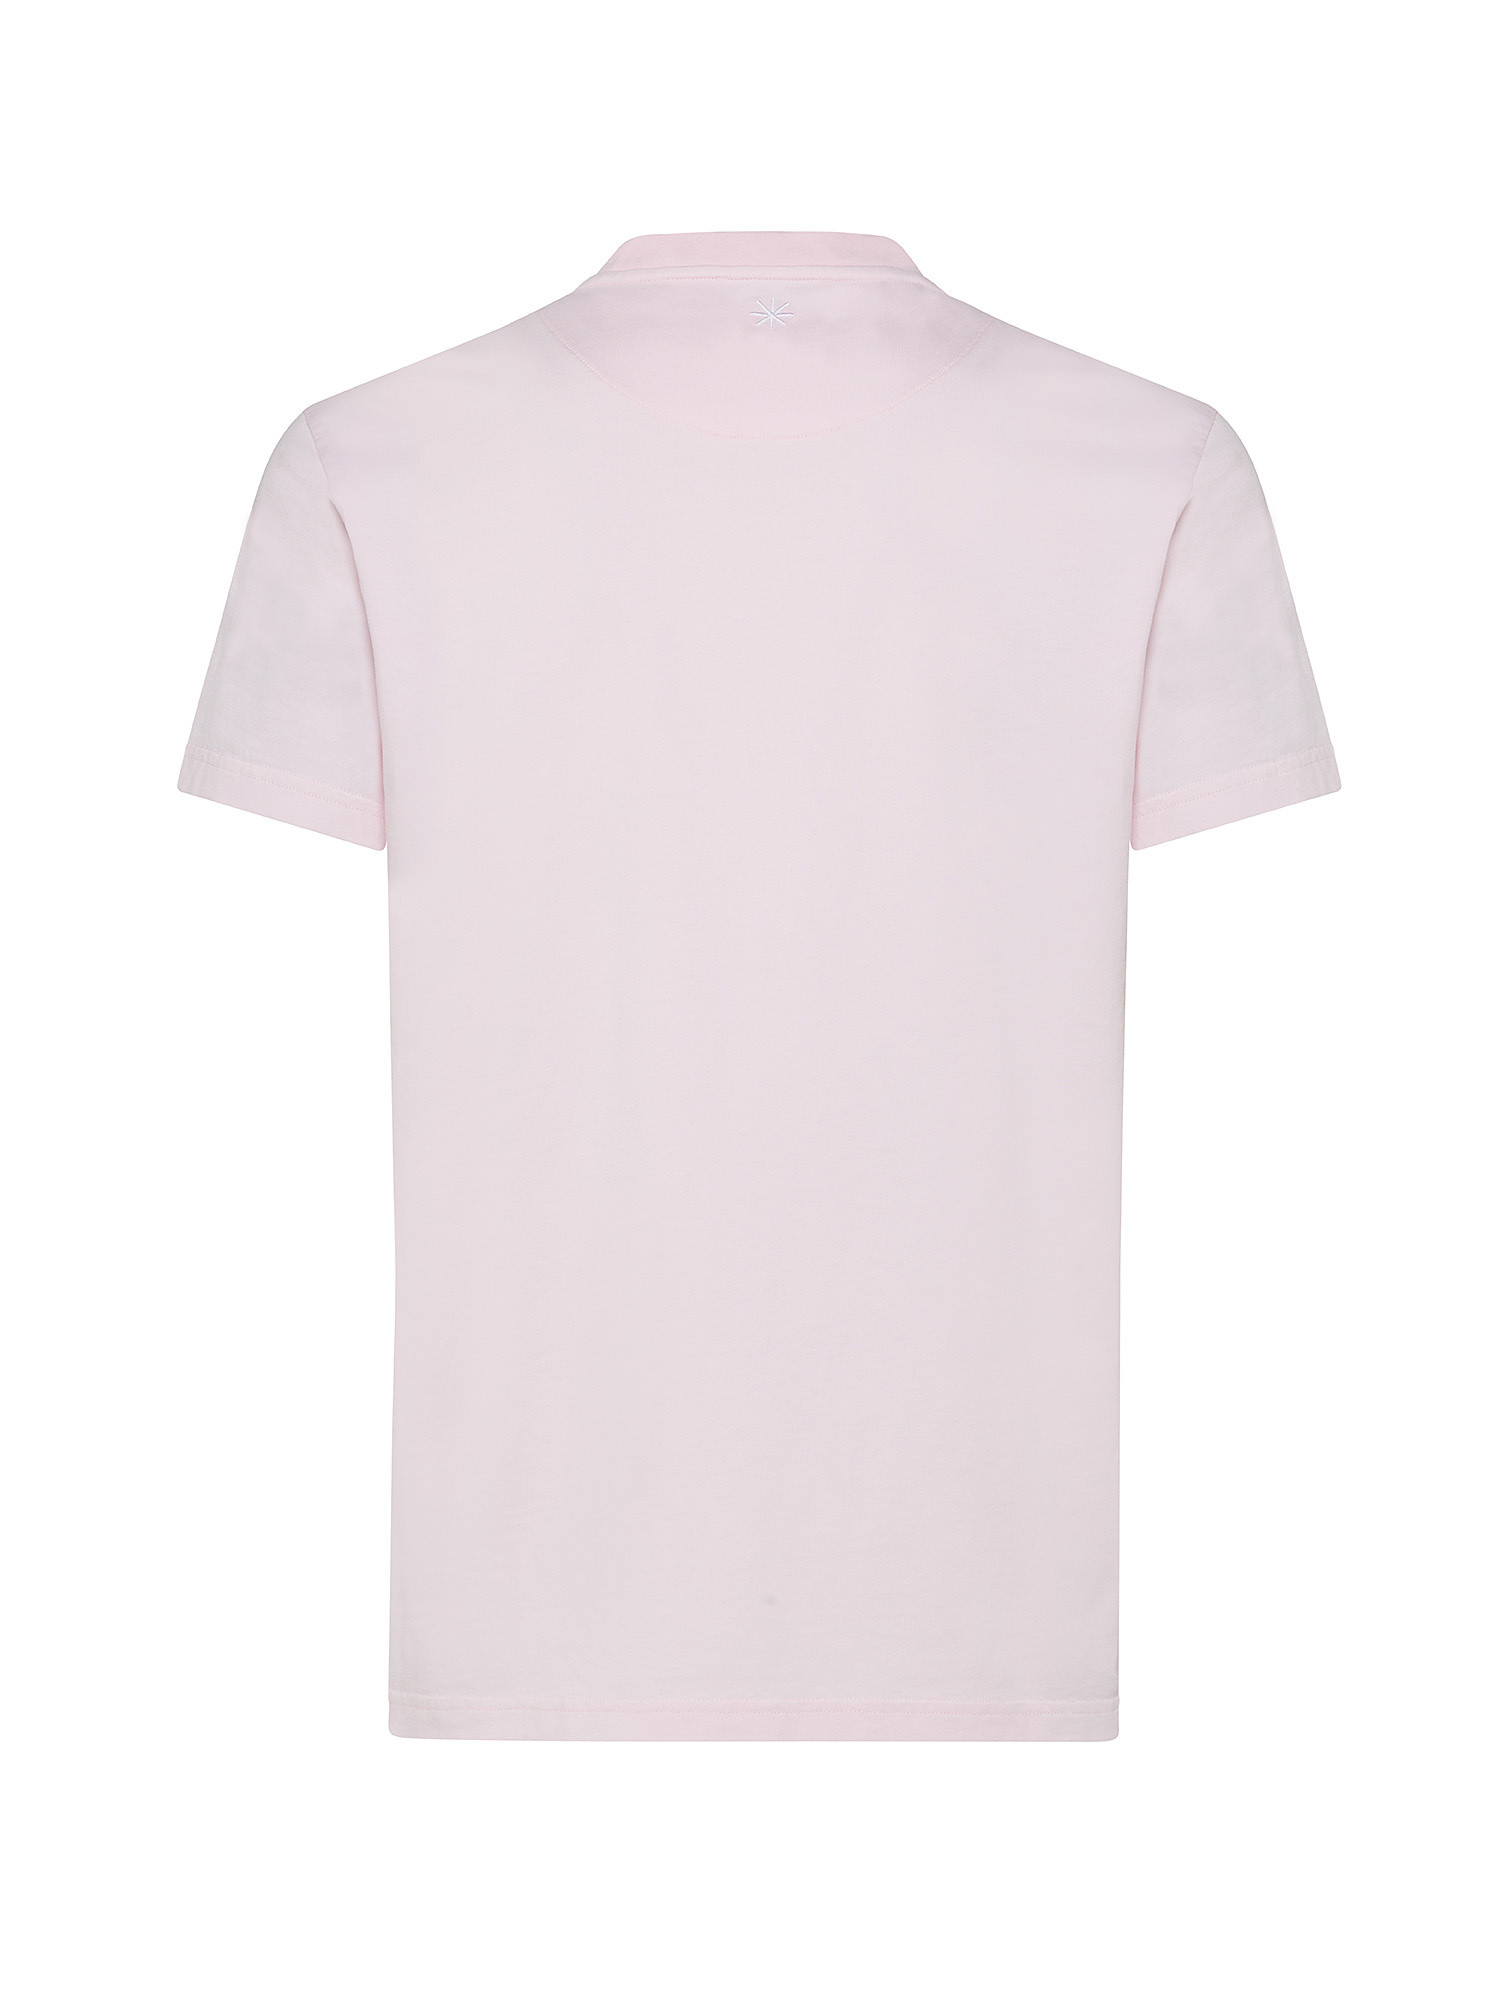 Manuel Ritz - Cotton T-shirt, Pink, large image number 1